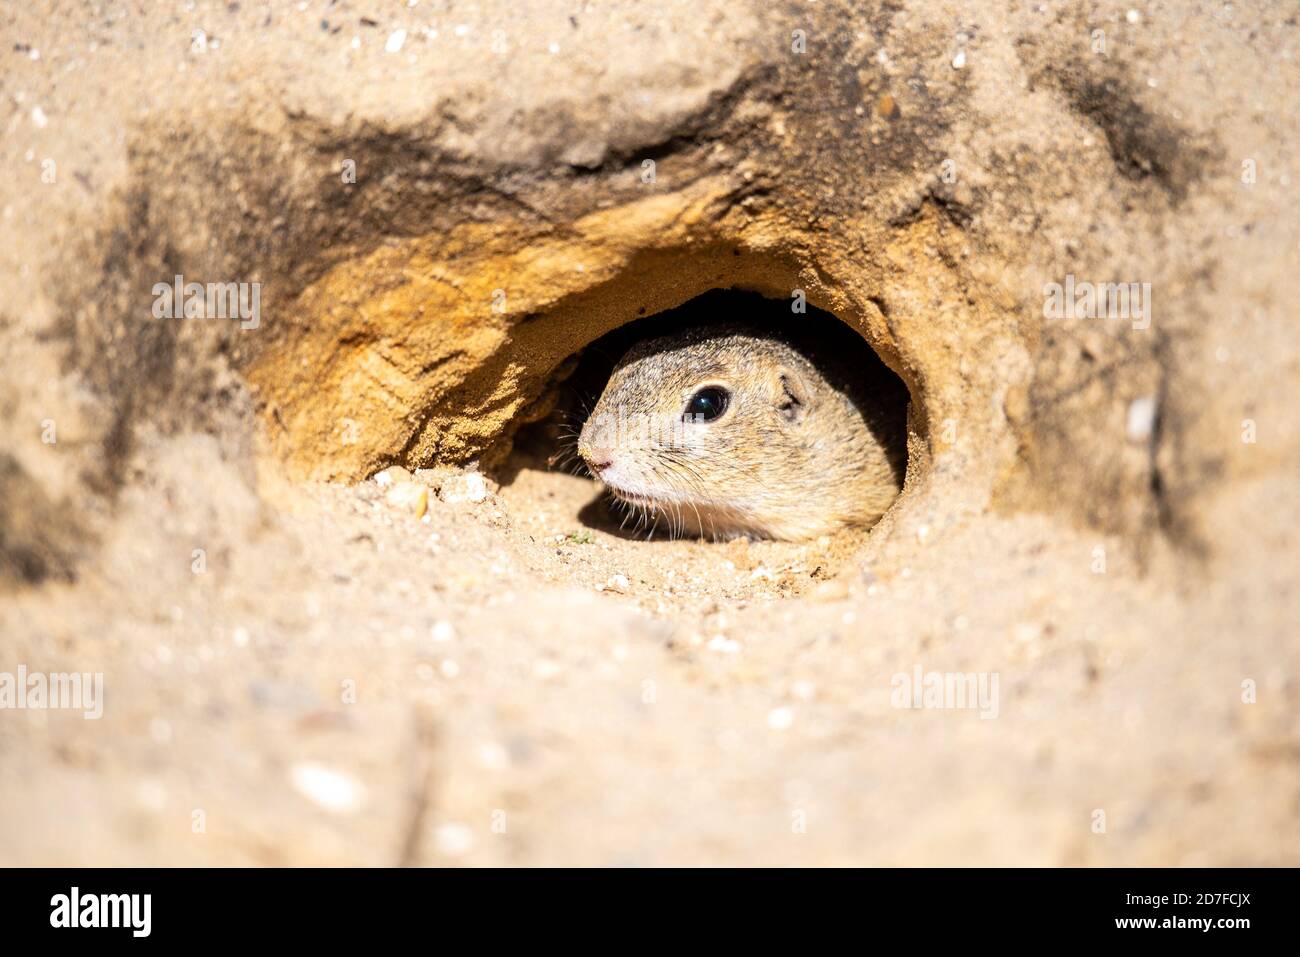 European ground squirrel, Spermophilus citellus, aka European souslik. Small rodent hidden in the burrow. Stock Photo